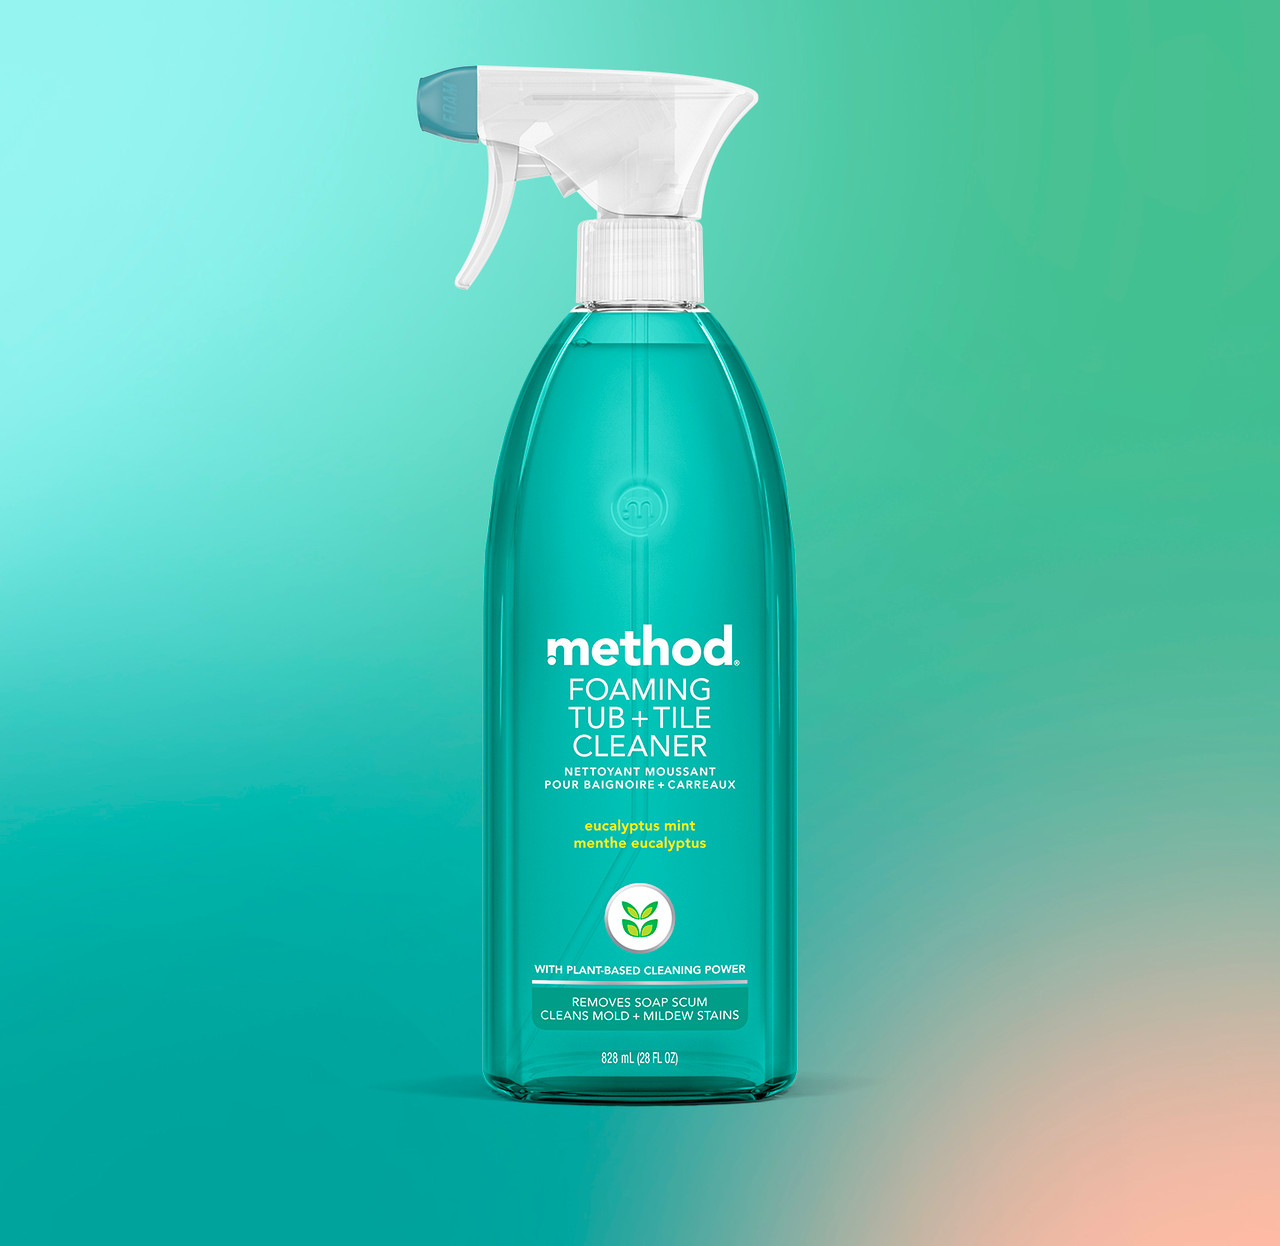 Bathroom Cleaner Spray Non-Toxic Method 828ml Fresh Eucalyptus